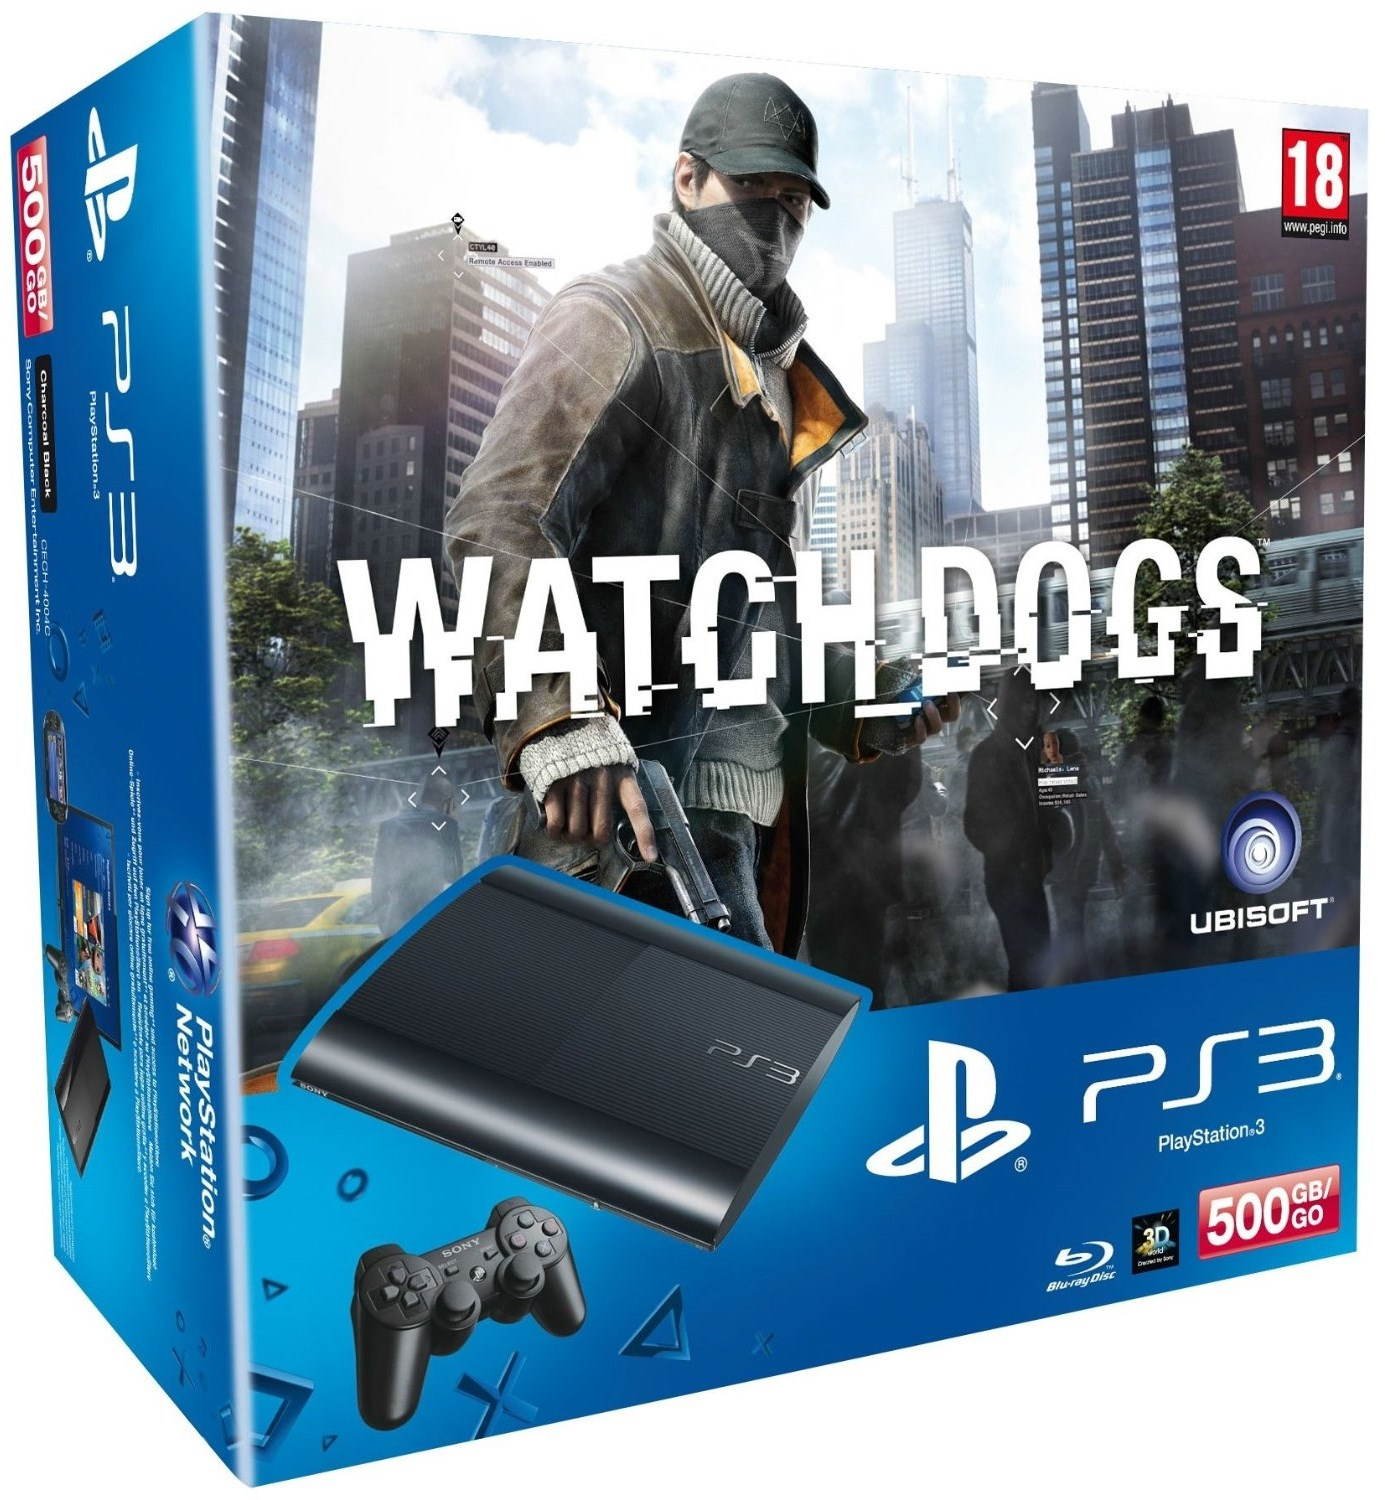 Sony PlayStation 3 Slim 500 GB + New Watch Dogs CZ - Game Console